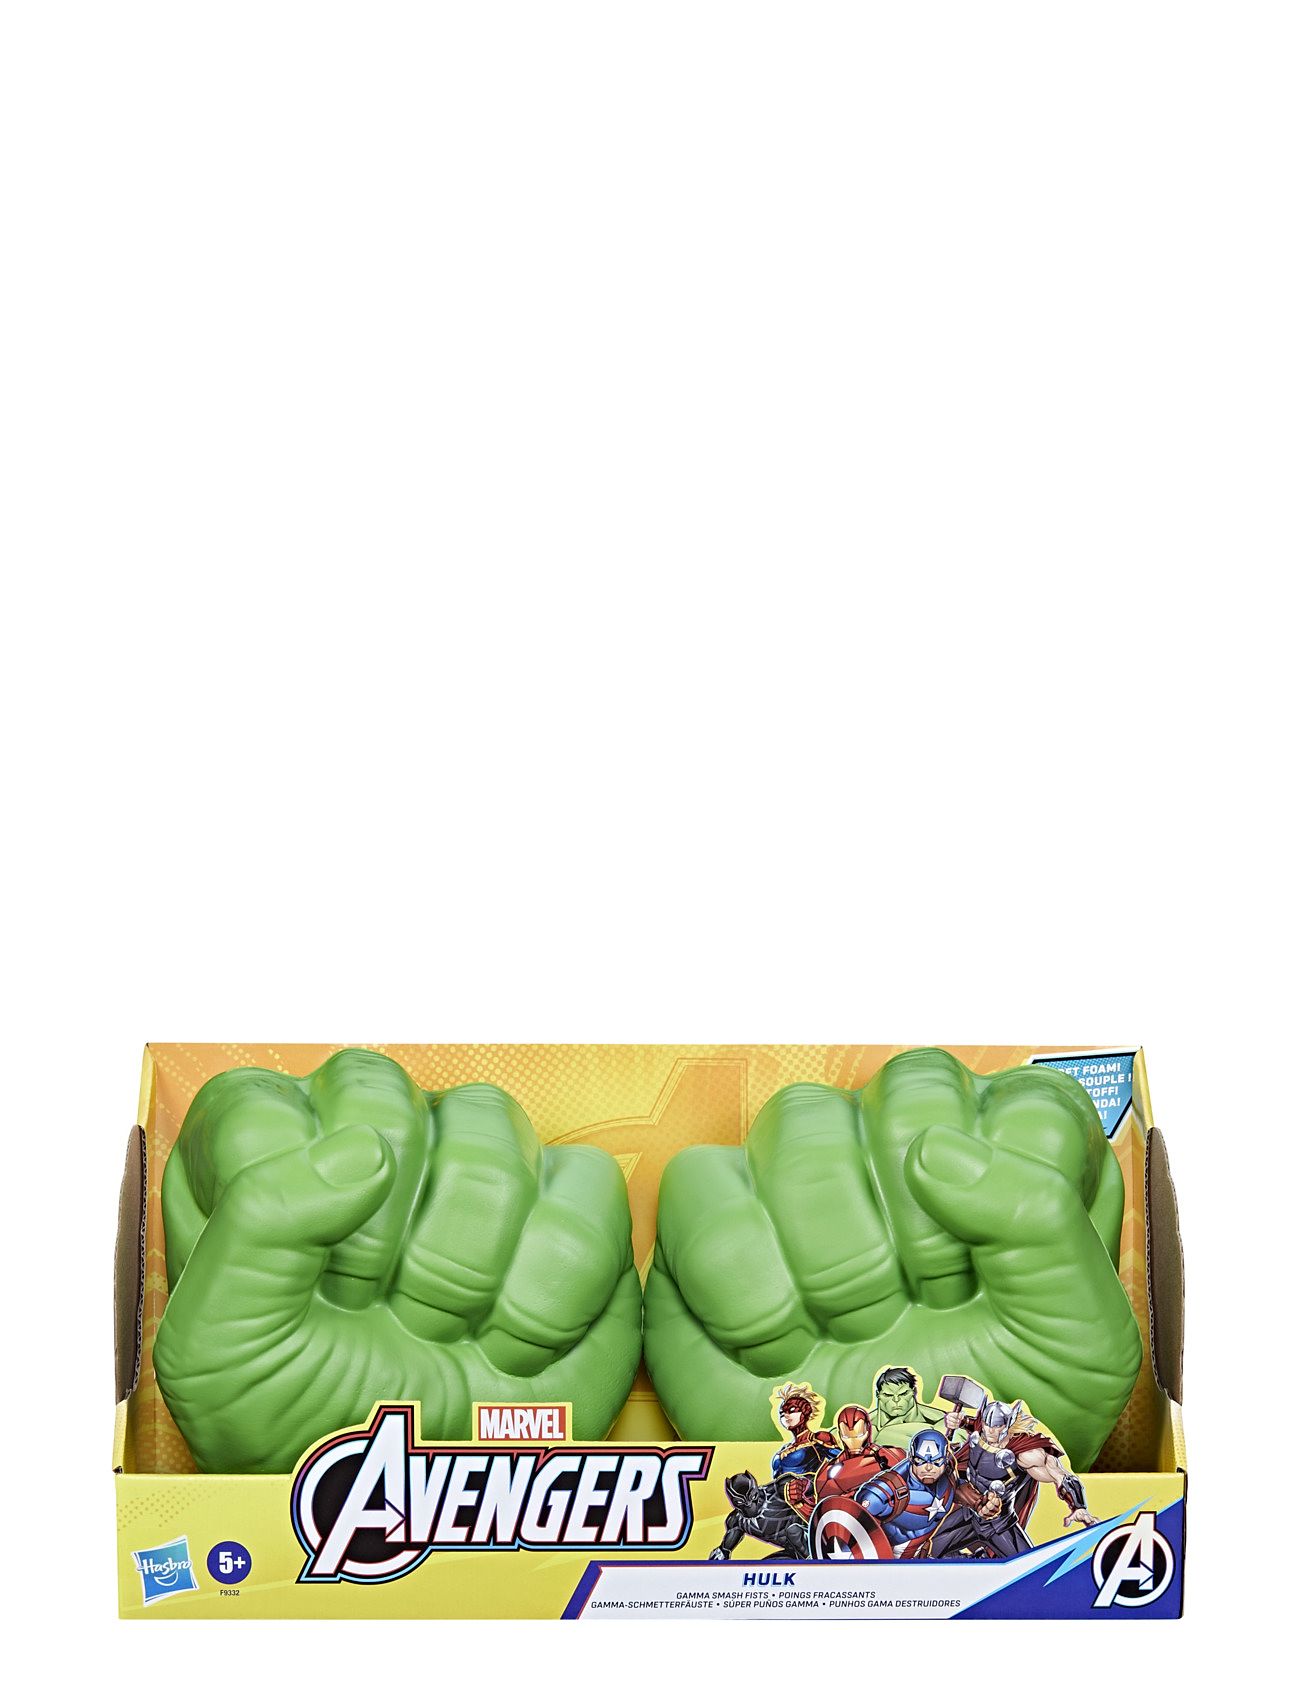 Marvel Avengers Hulk Gamma Smash Fists Toys Costumes & Accessories Costumes Accessories Multi/patterned Marvel